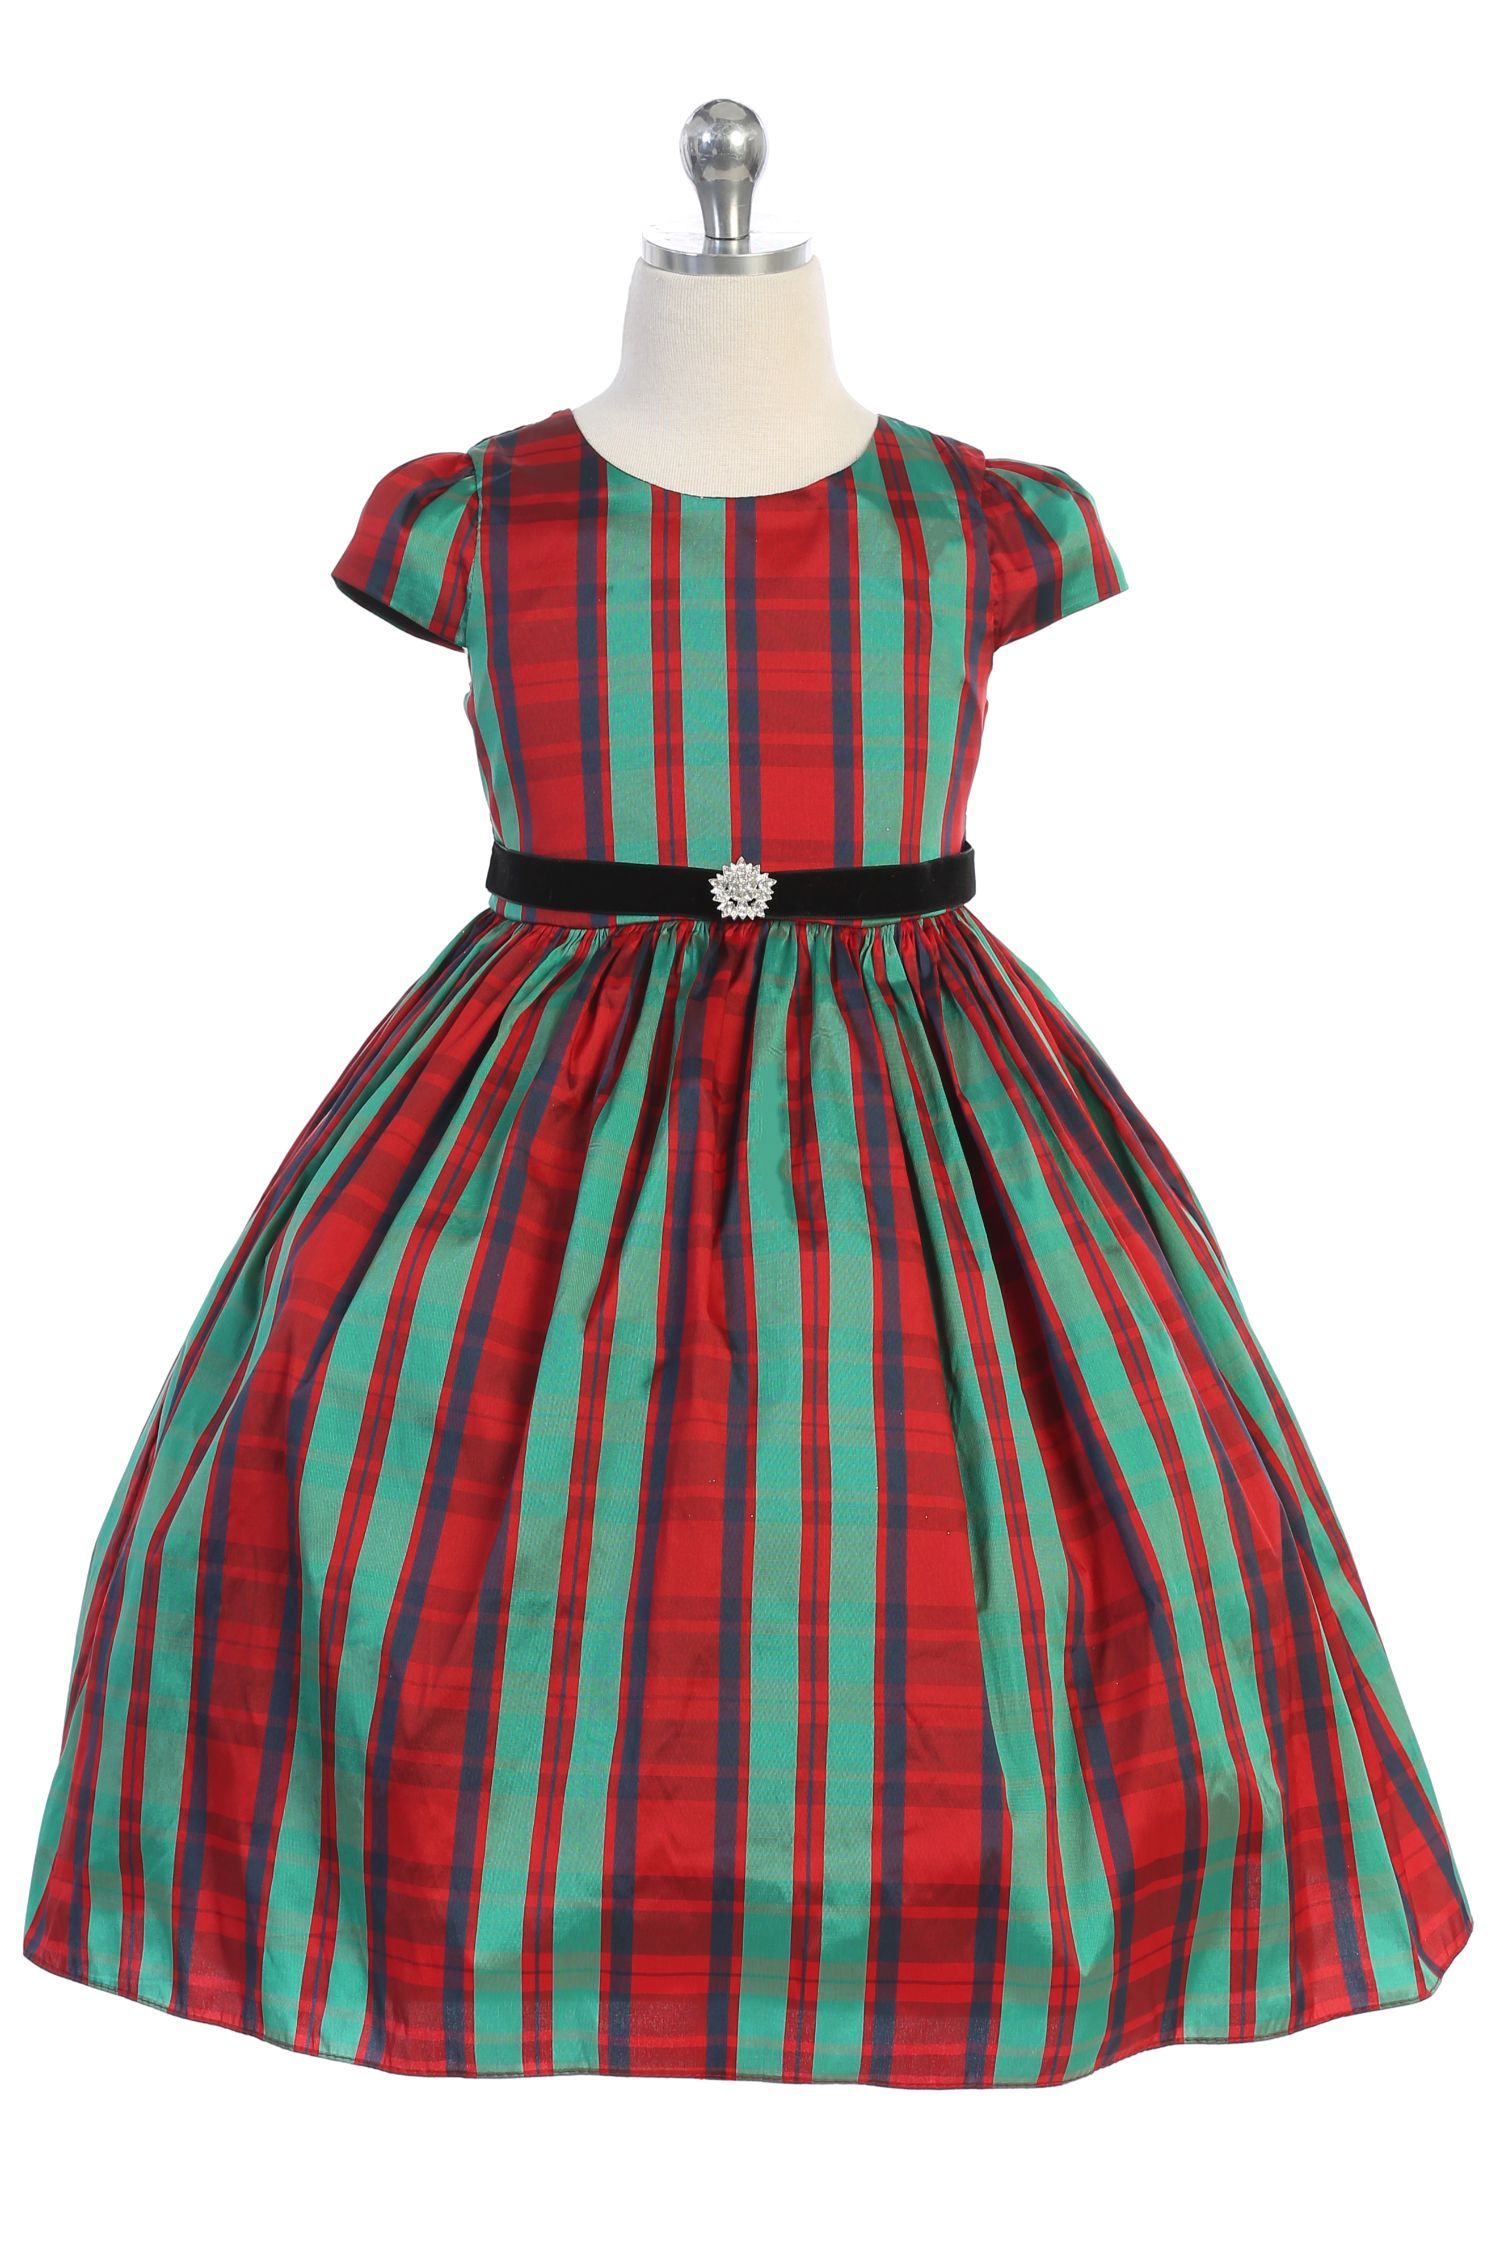 Dress - Classic Plaid Sleeve Plus Size Girl Dress